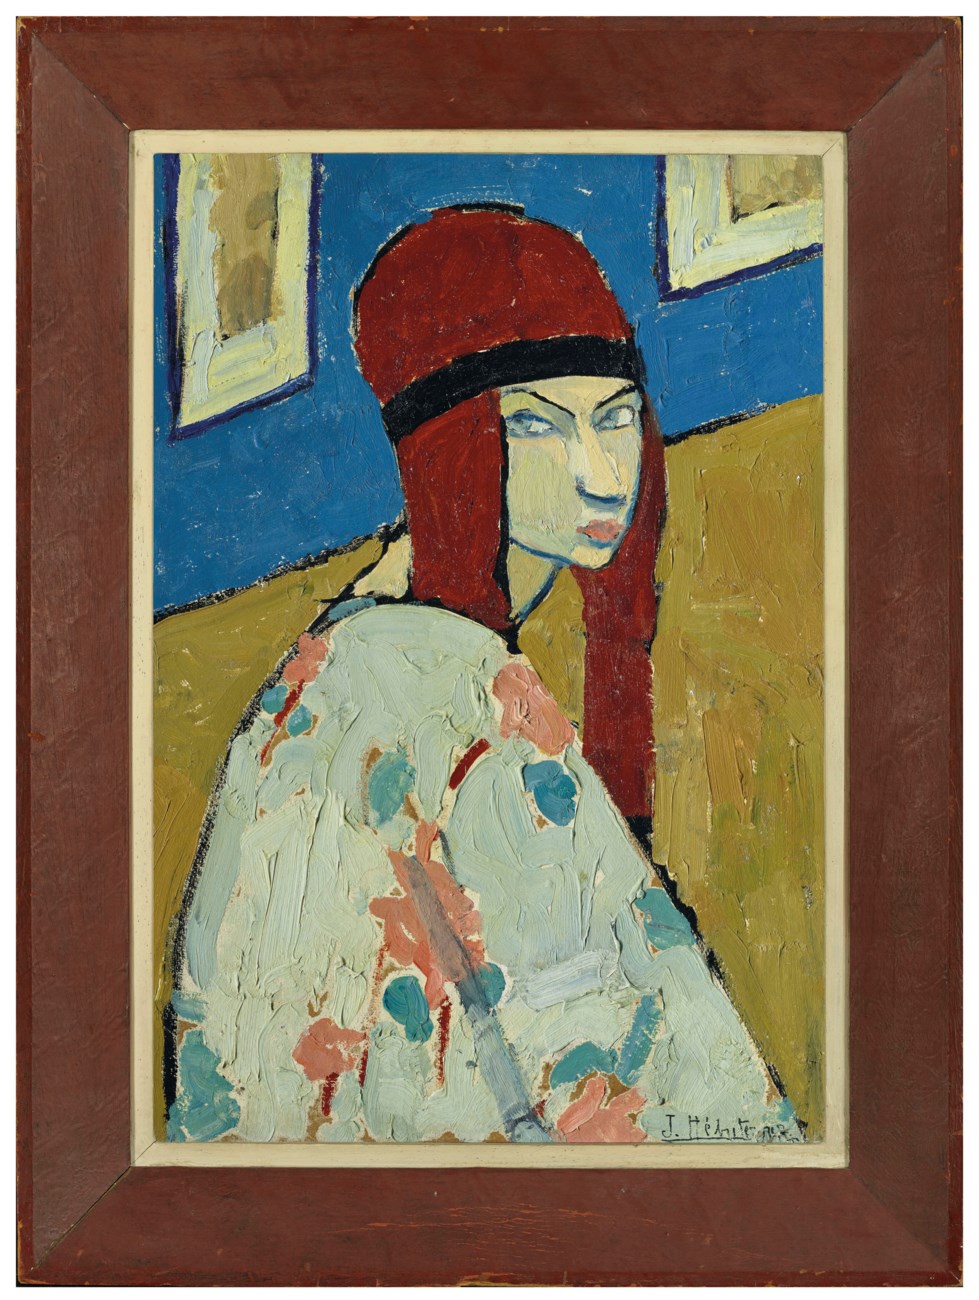 Self-Portrait by Jeanne Hébuterne - c, 1917 - 44.5 x 30.5 cm private collection